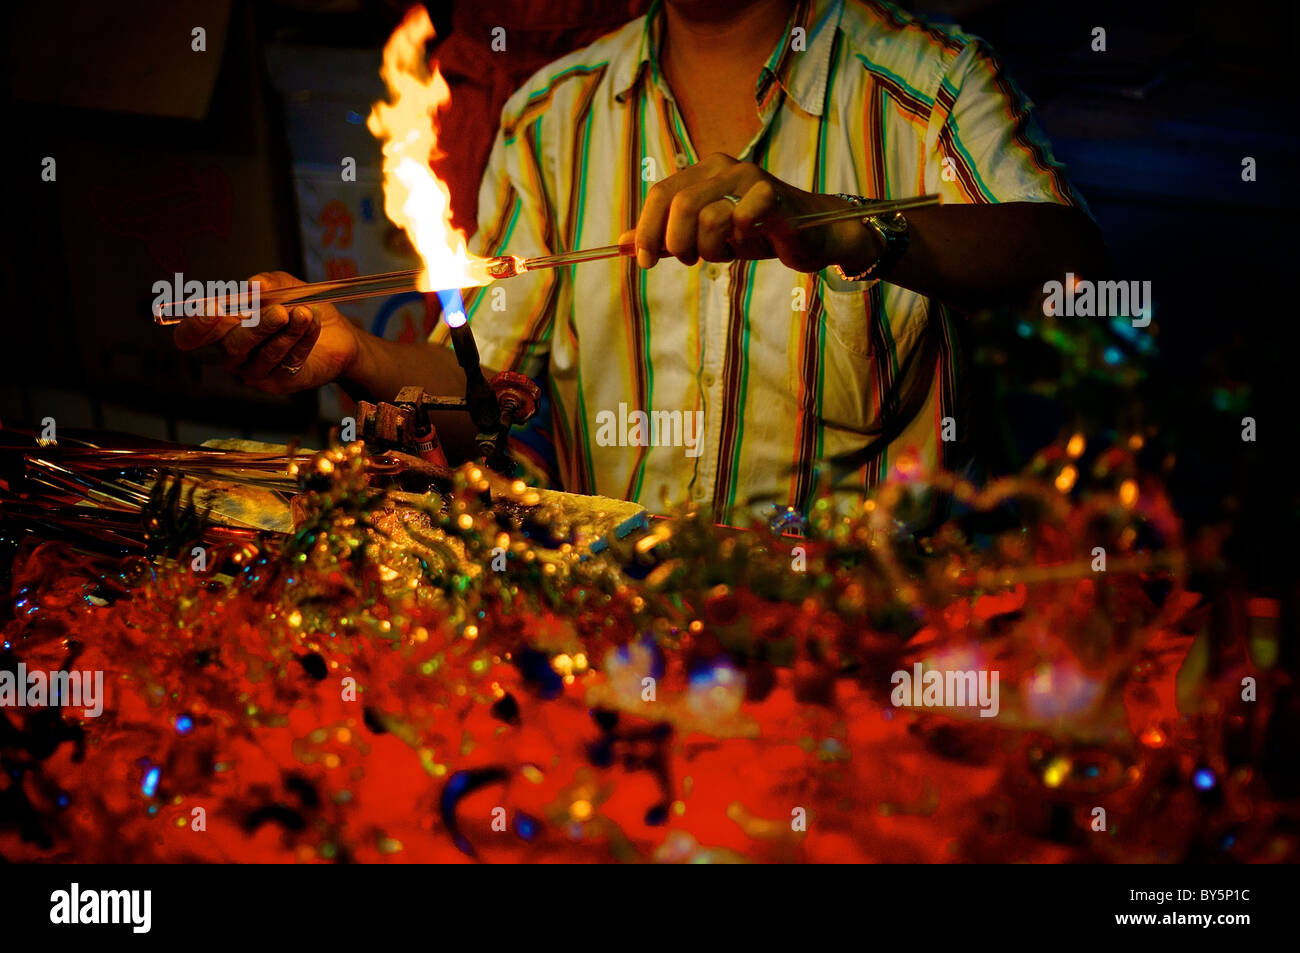 man making glass artworks Stock Photo